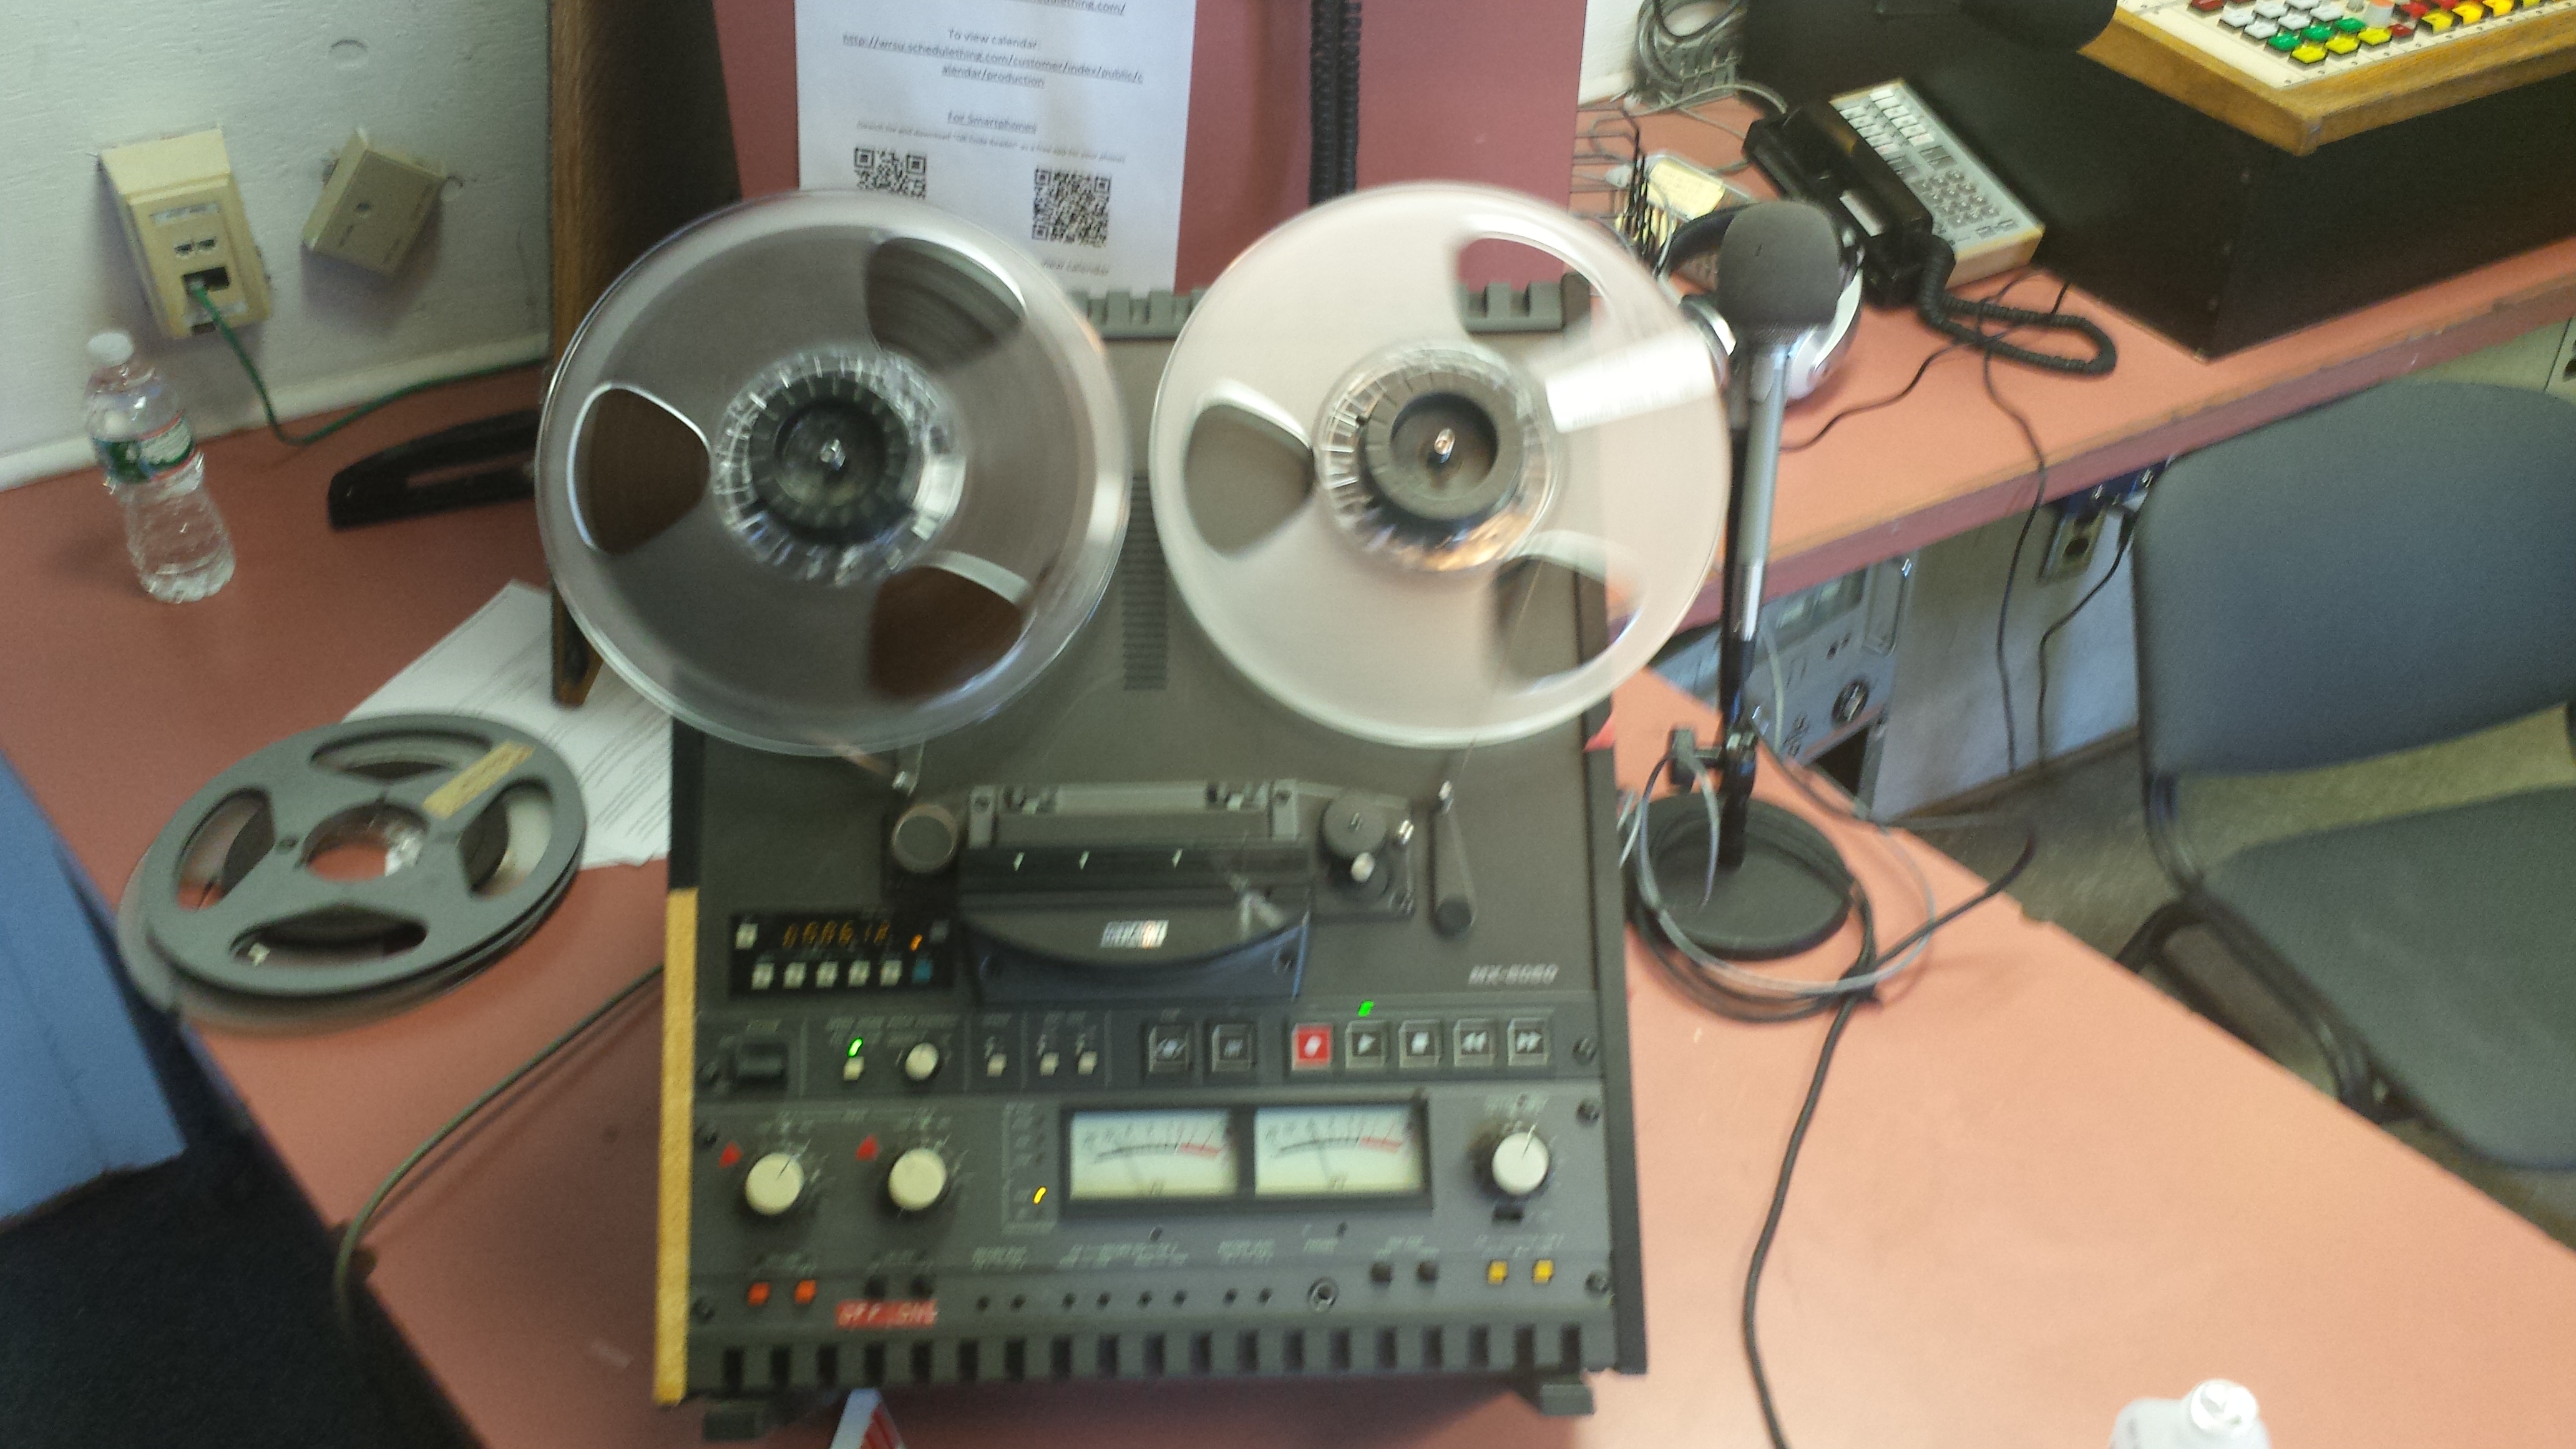 2014 - A Reel to Reel Machine - Copying Analog Tape to Digital